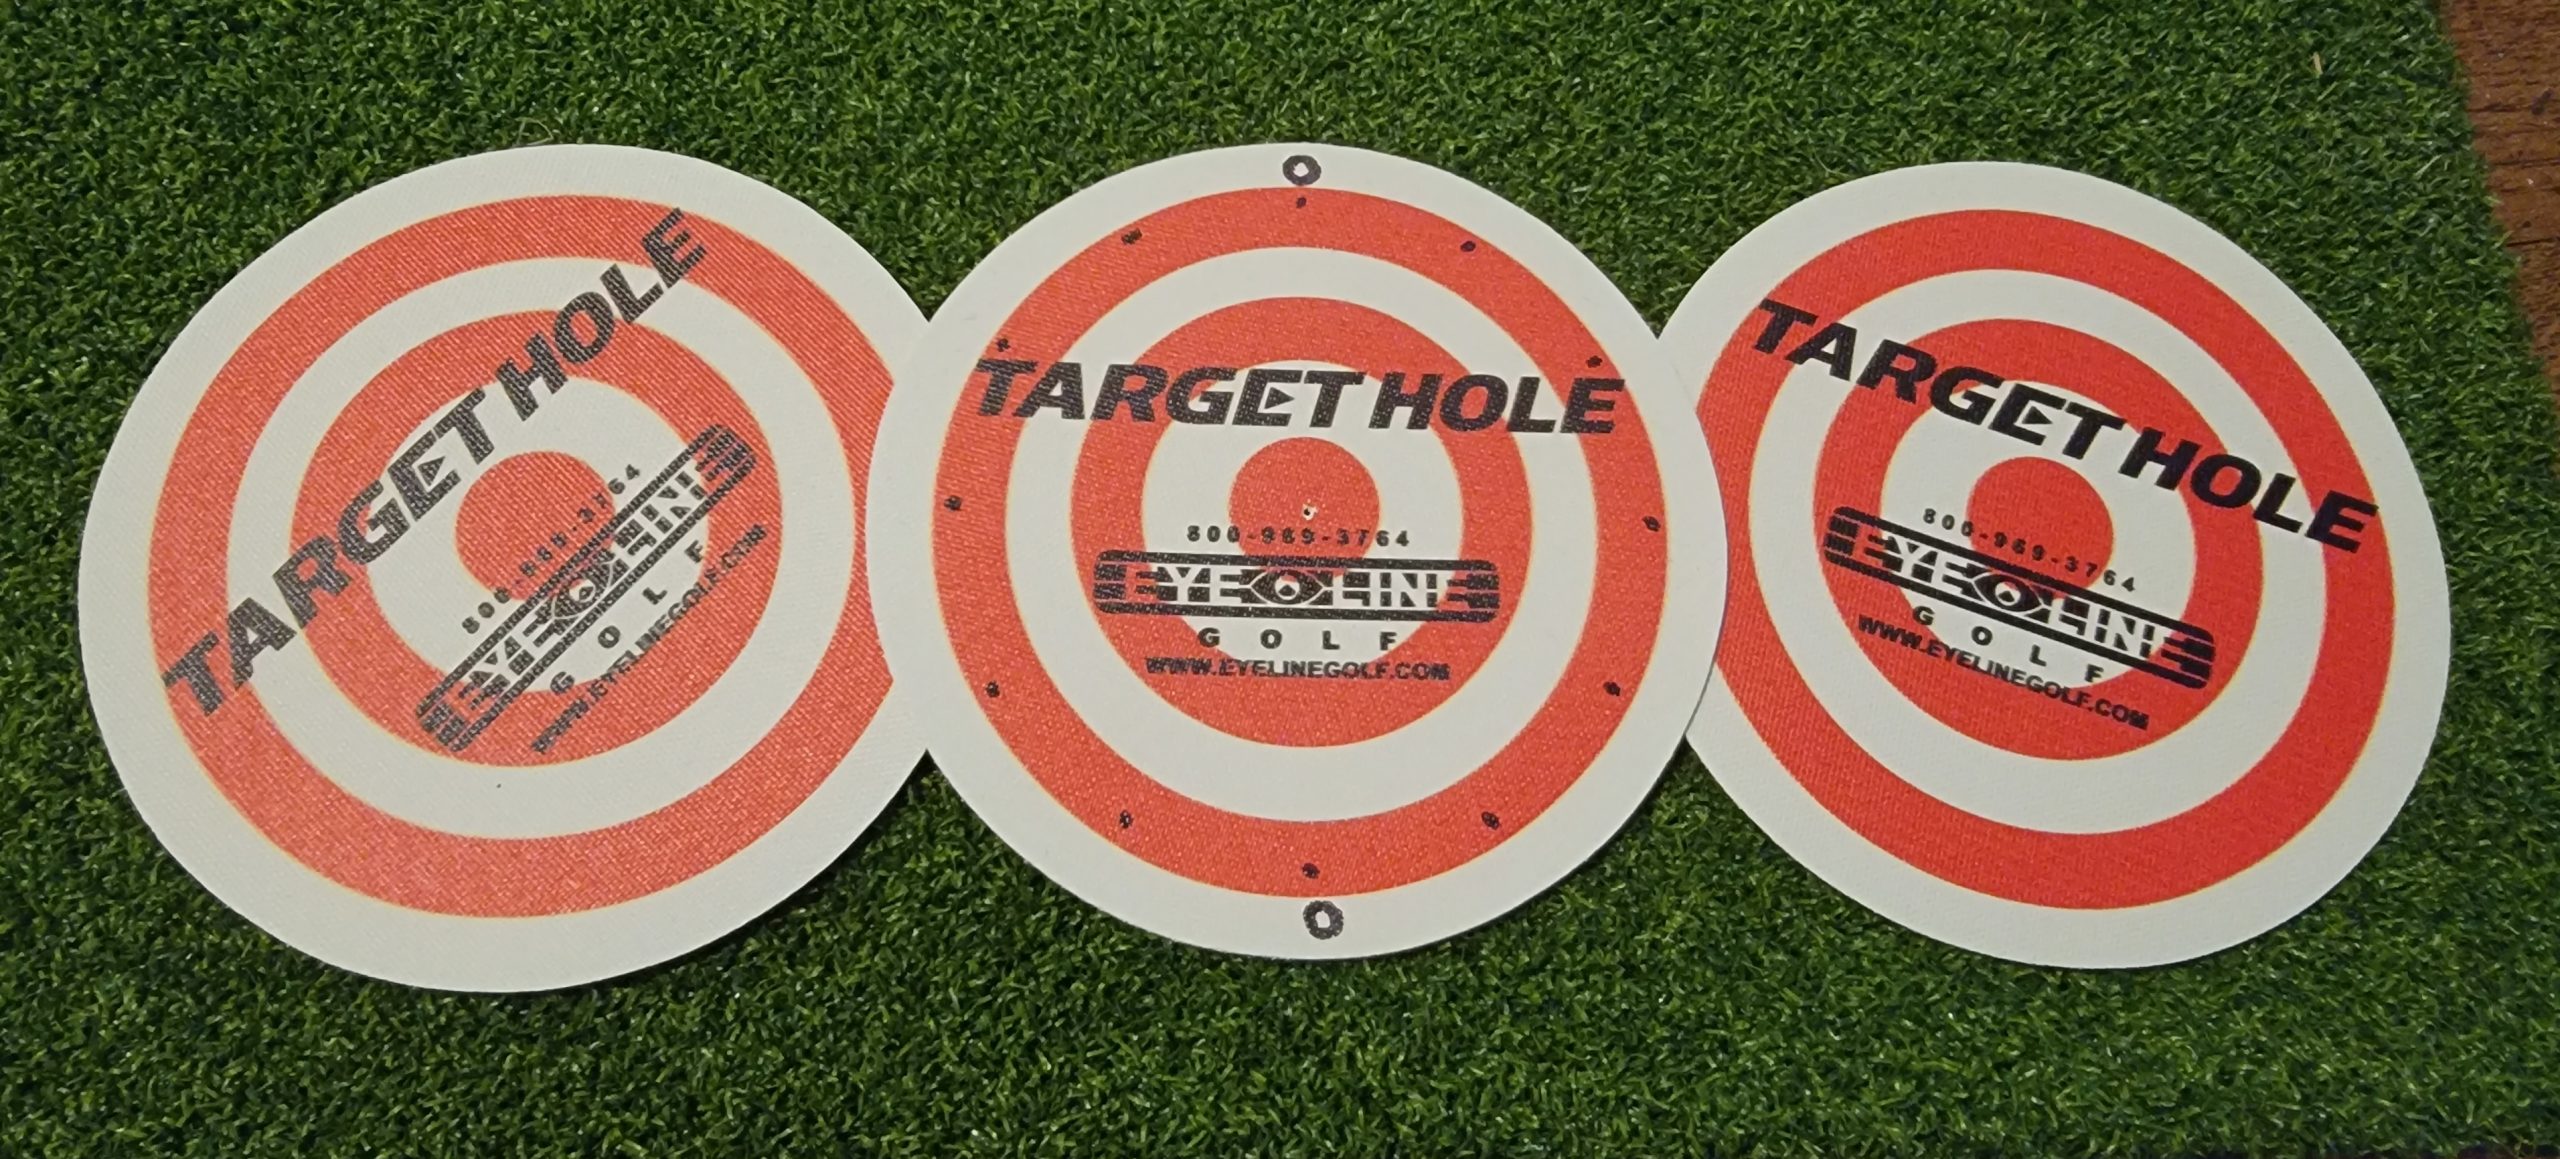 Old Duffer Golf image target holes